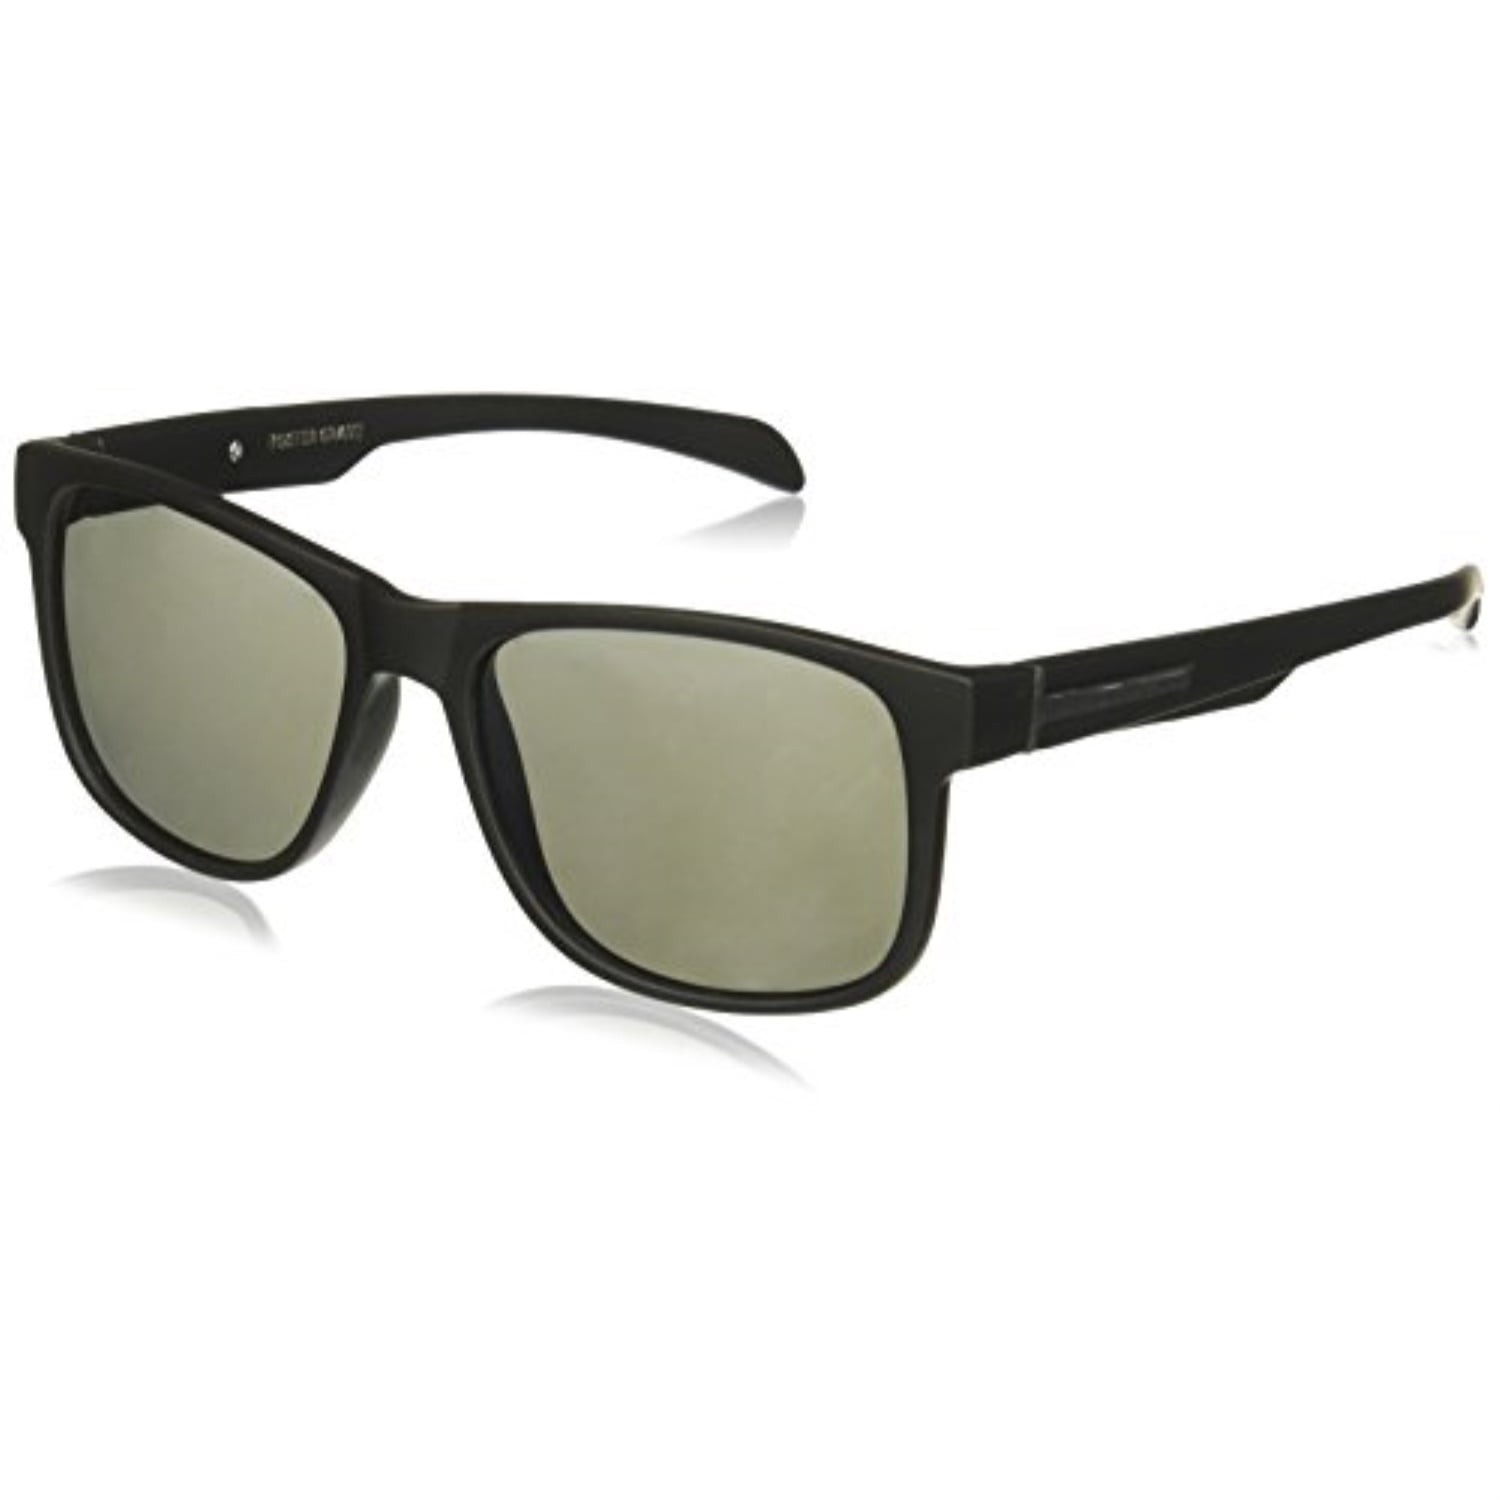 foster men's ramble sunglasses, black, 158 mm -